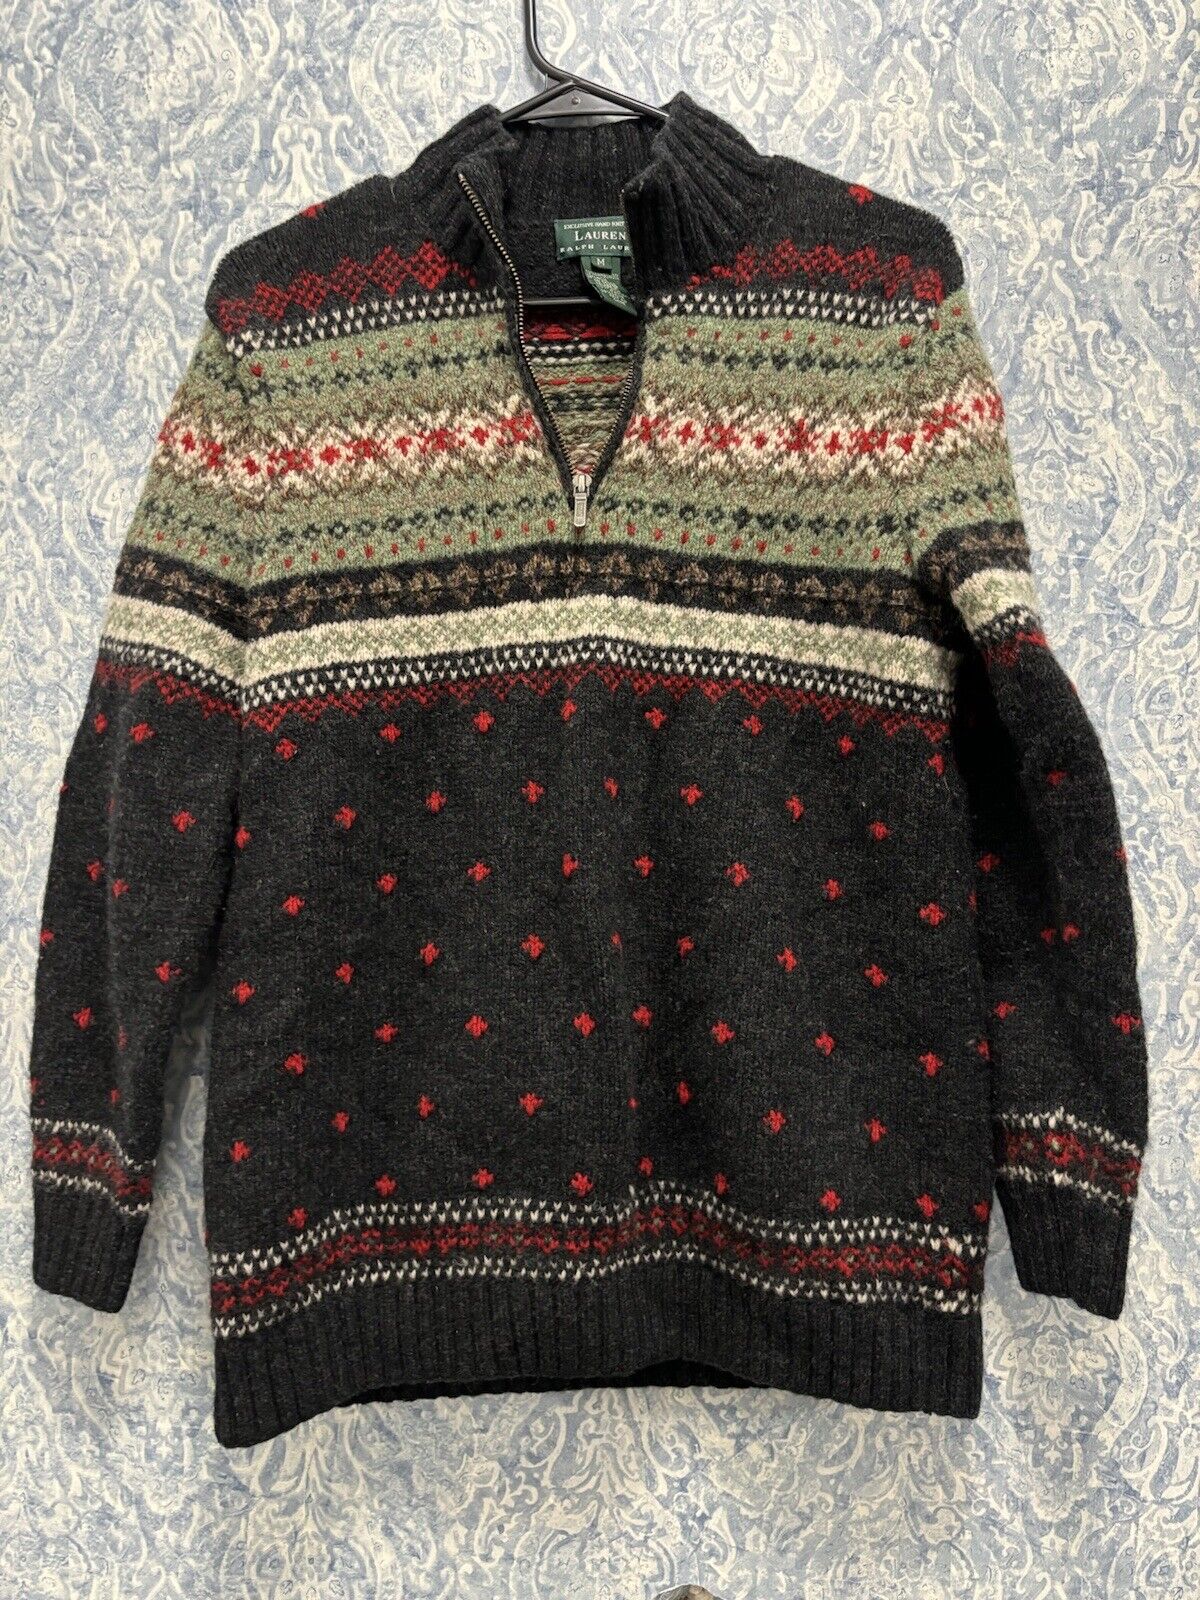 Vintage Polo Ralph Lauren Hand Knit Lambs wool Blend Sweater Size Medium